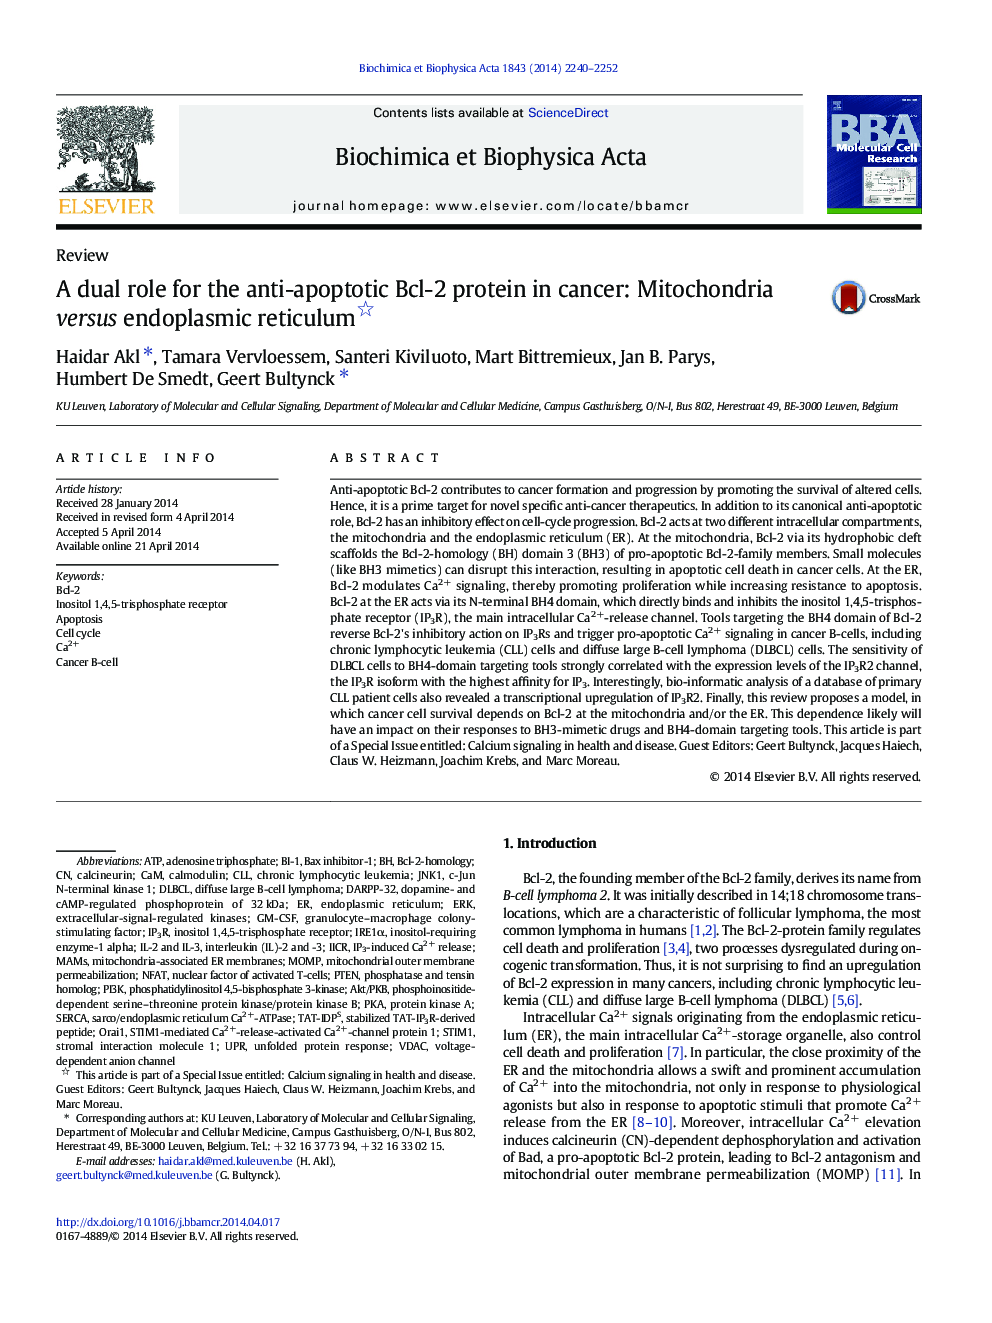 A dual role for the anti-apoptotic Bcl-2 protein in cancer: Mitochondria versus endoplasmic reticulum 